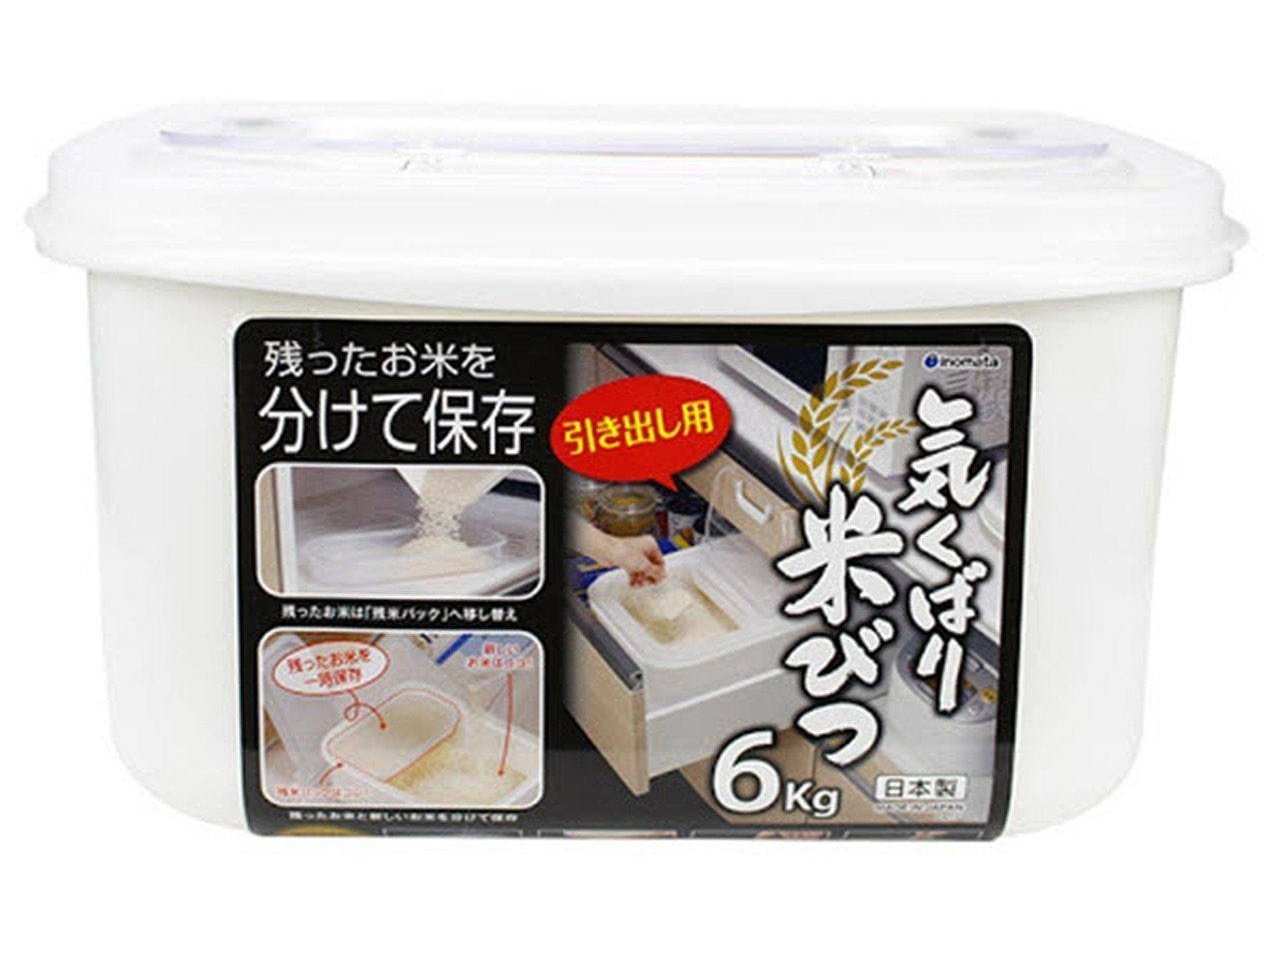 Shimoyama Hinoki Rice Storage Container 5kg - MINIMARU